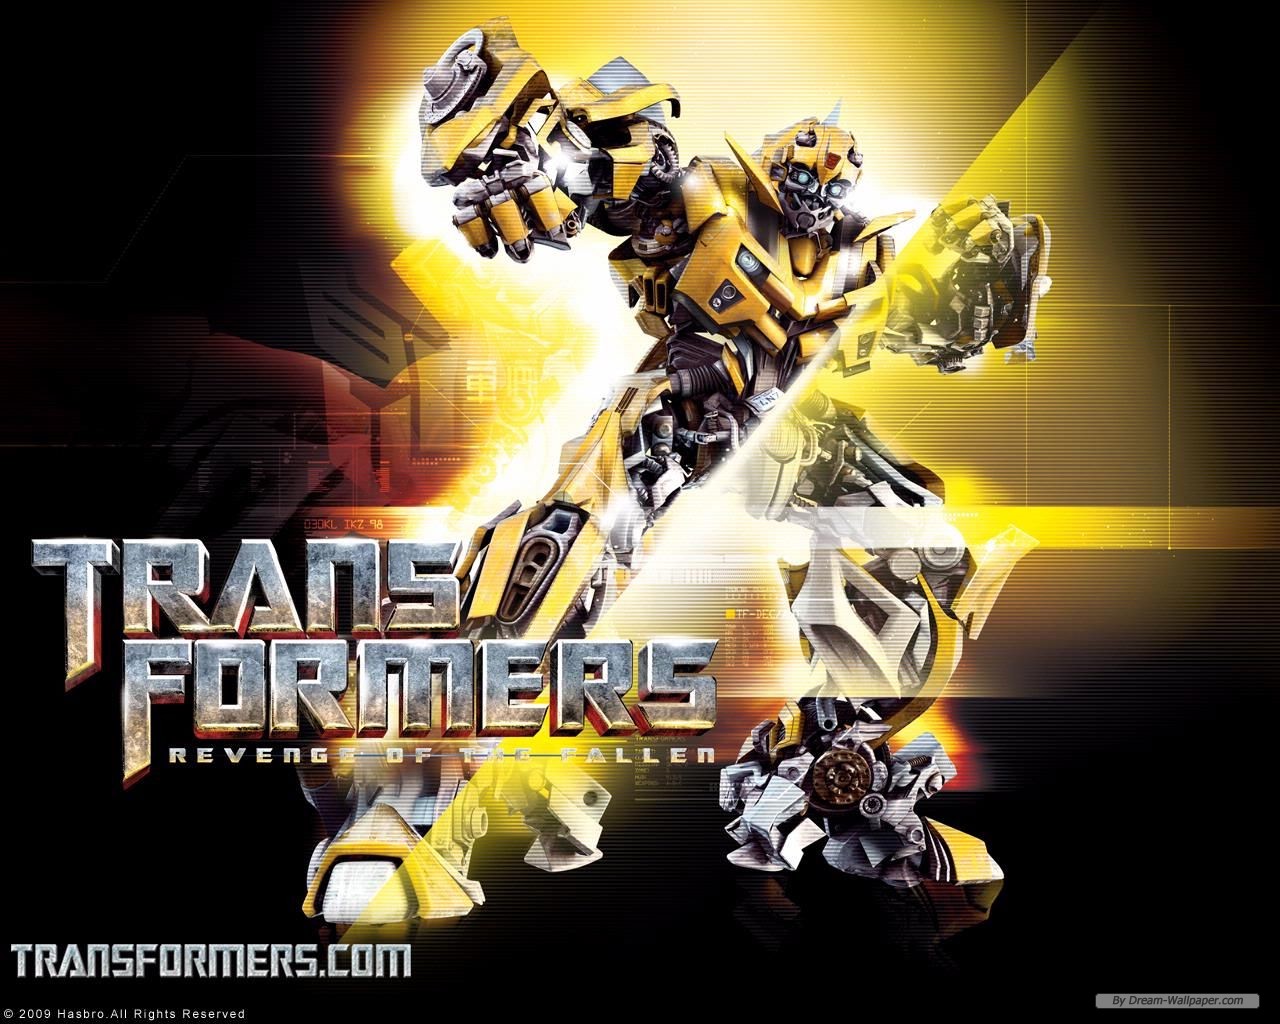 Free Wallpaper - Free Movie wallpaper - Transformers 2 wallpaper